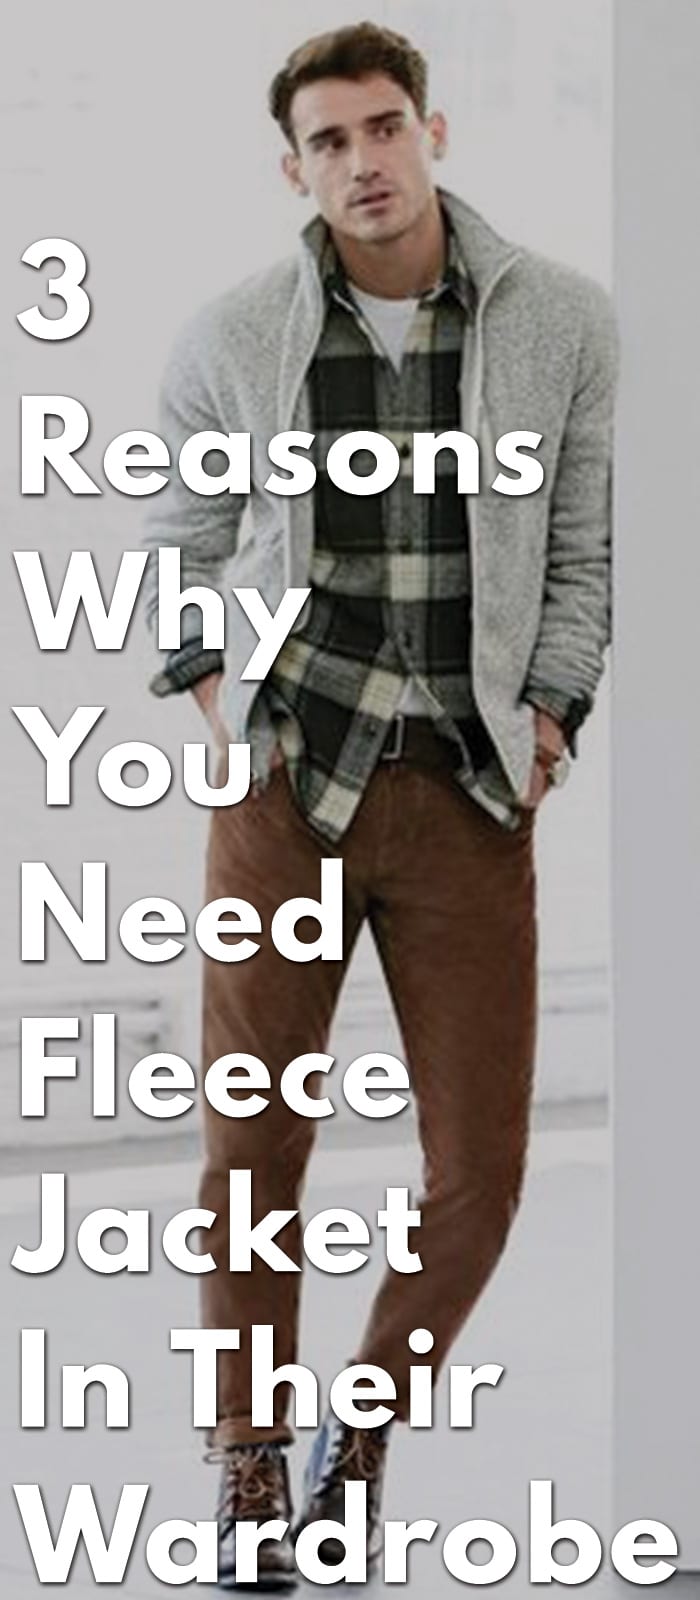 3-Reasons-Why-You-Need-Fleece-Jacket-In-Their-Wardrobe